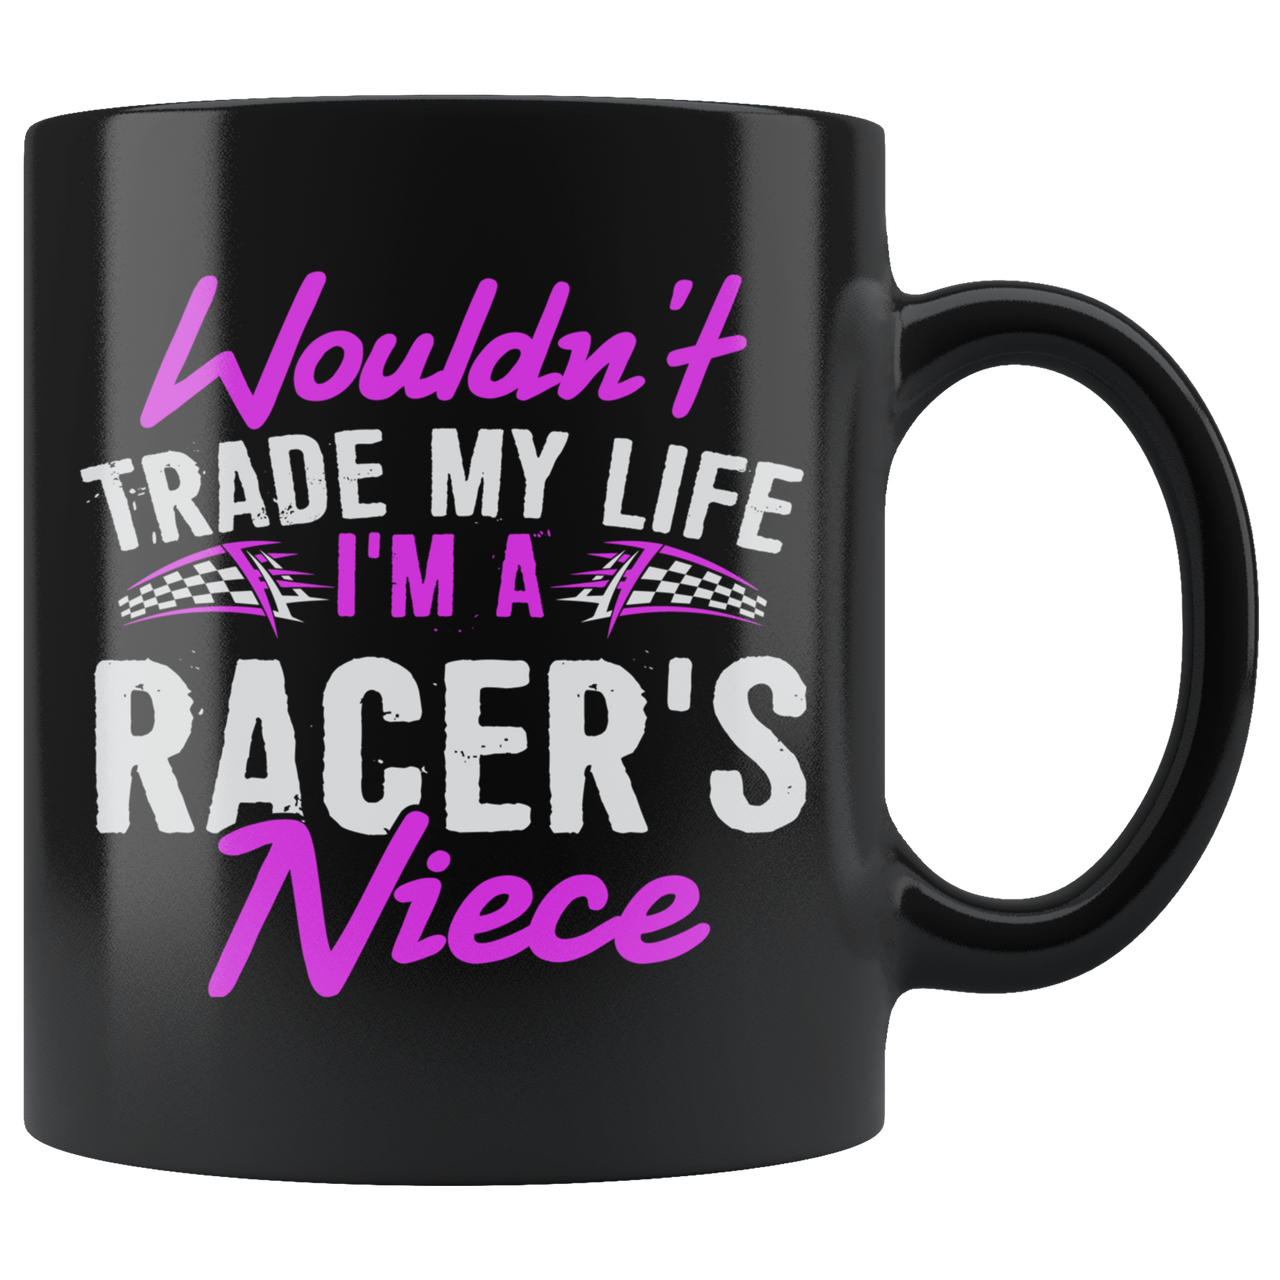 Wouldn't Trade My Life I'm A Racer's Niece Mug!